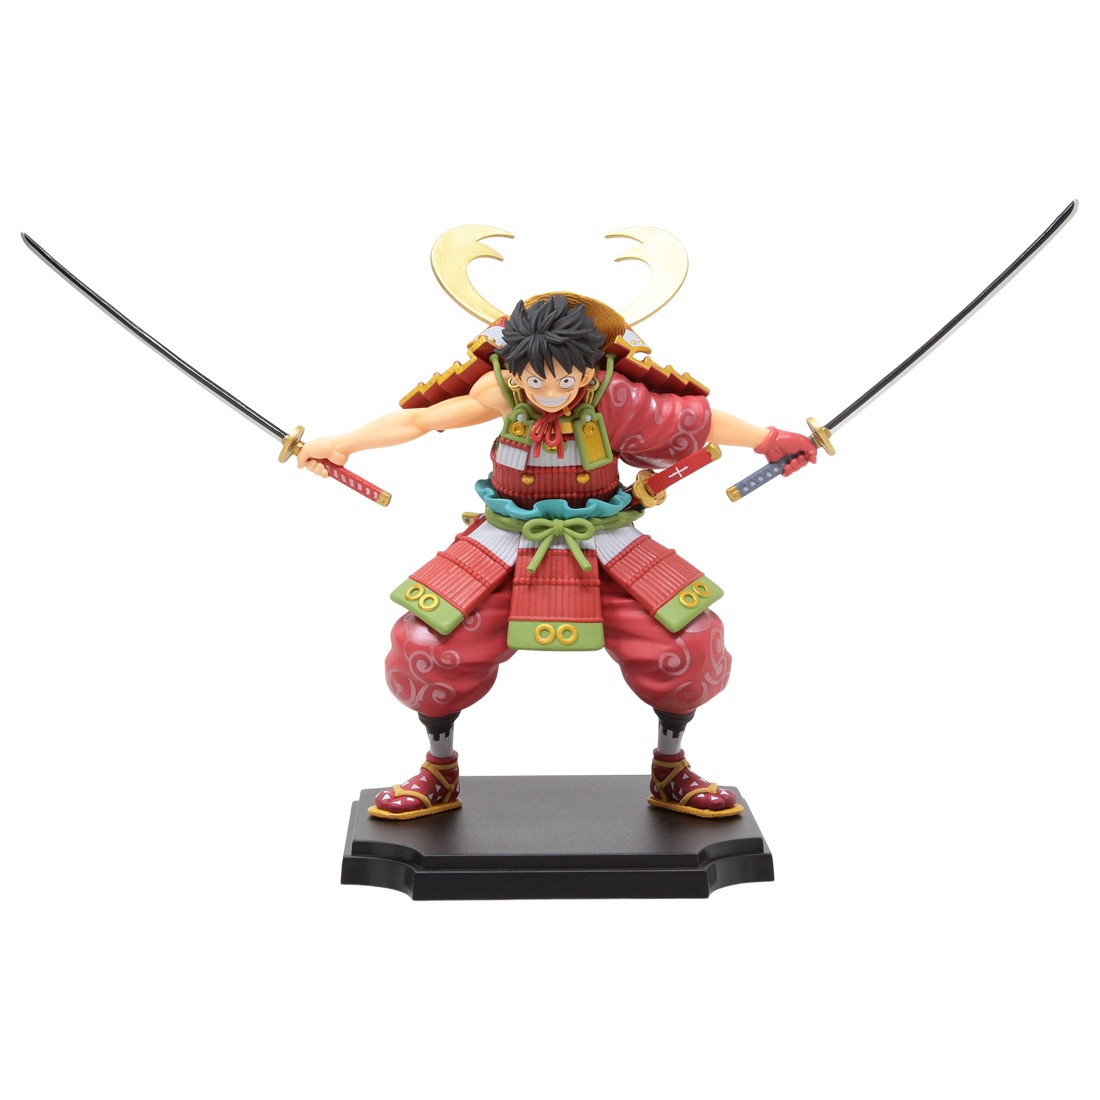 Bandai Ichibansho One Piece Armor Warrior Luffytaro Figure (red)